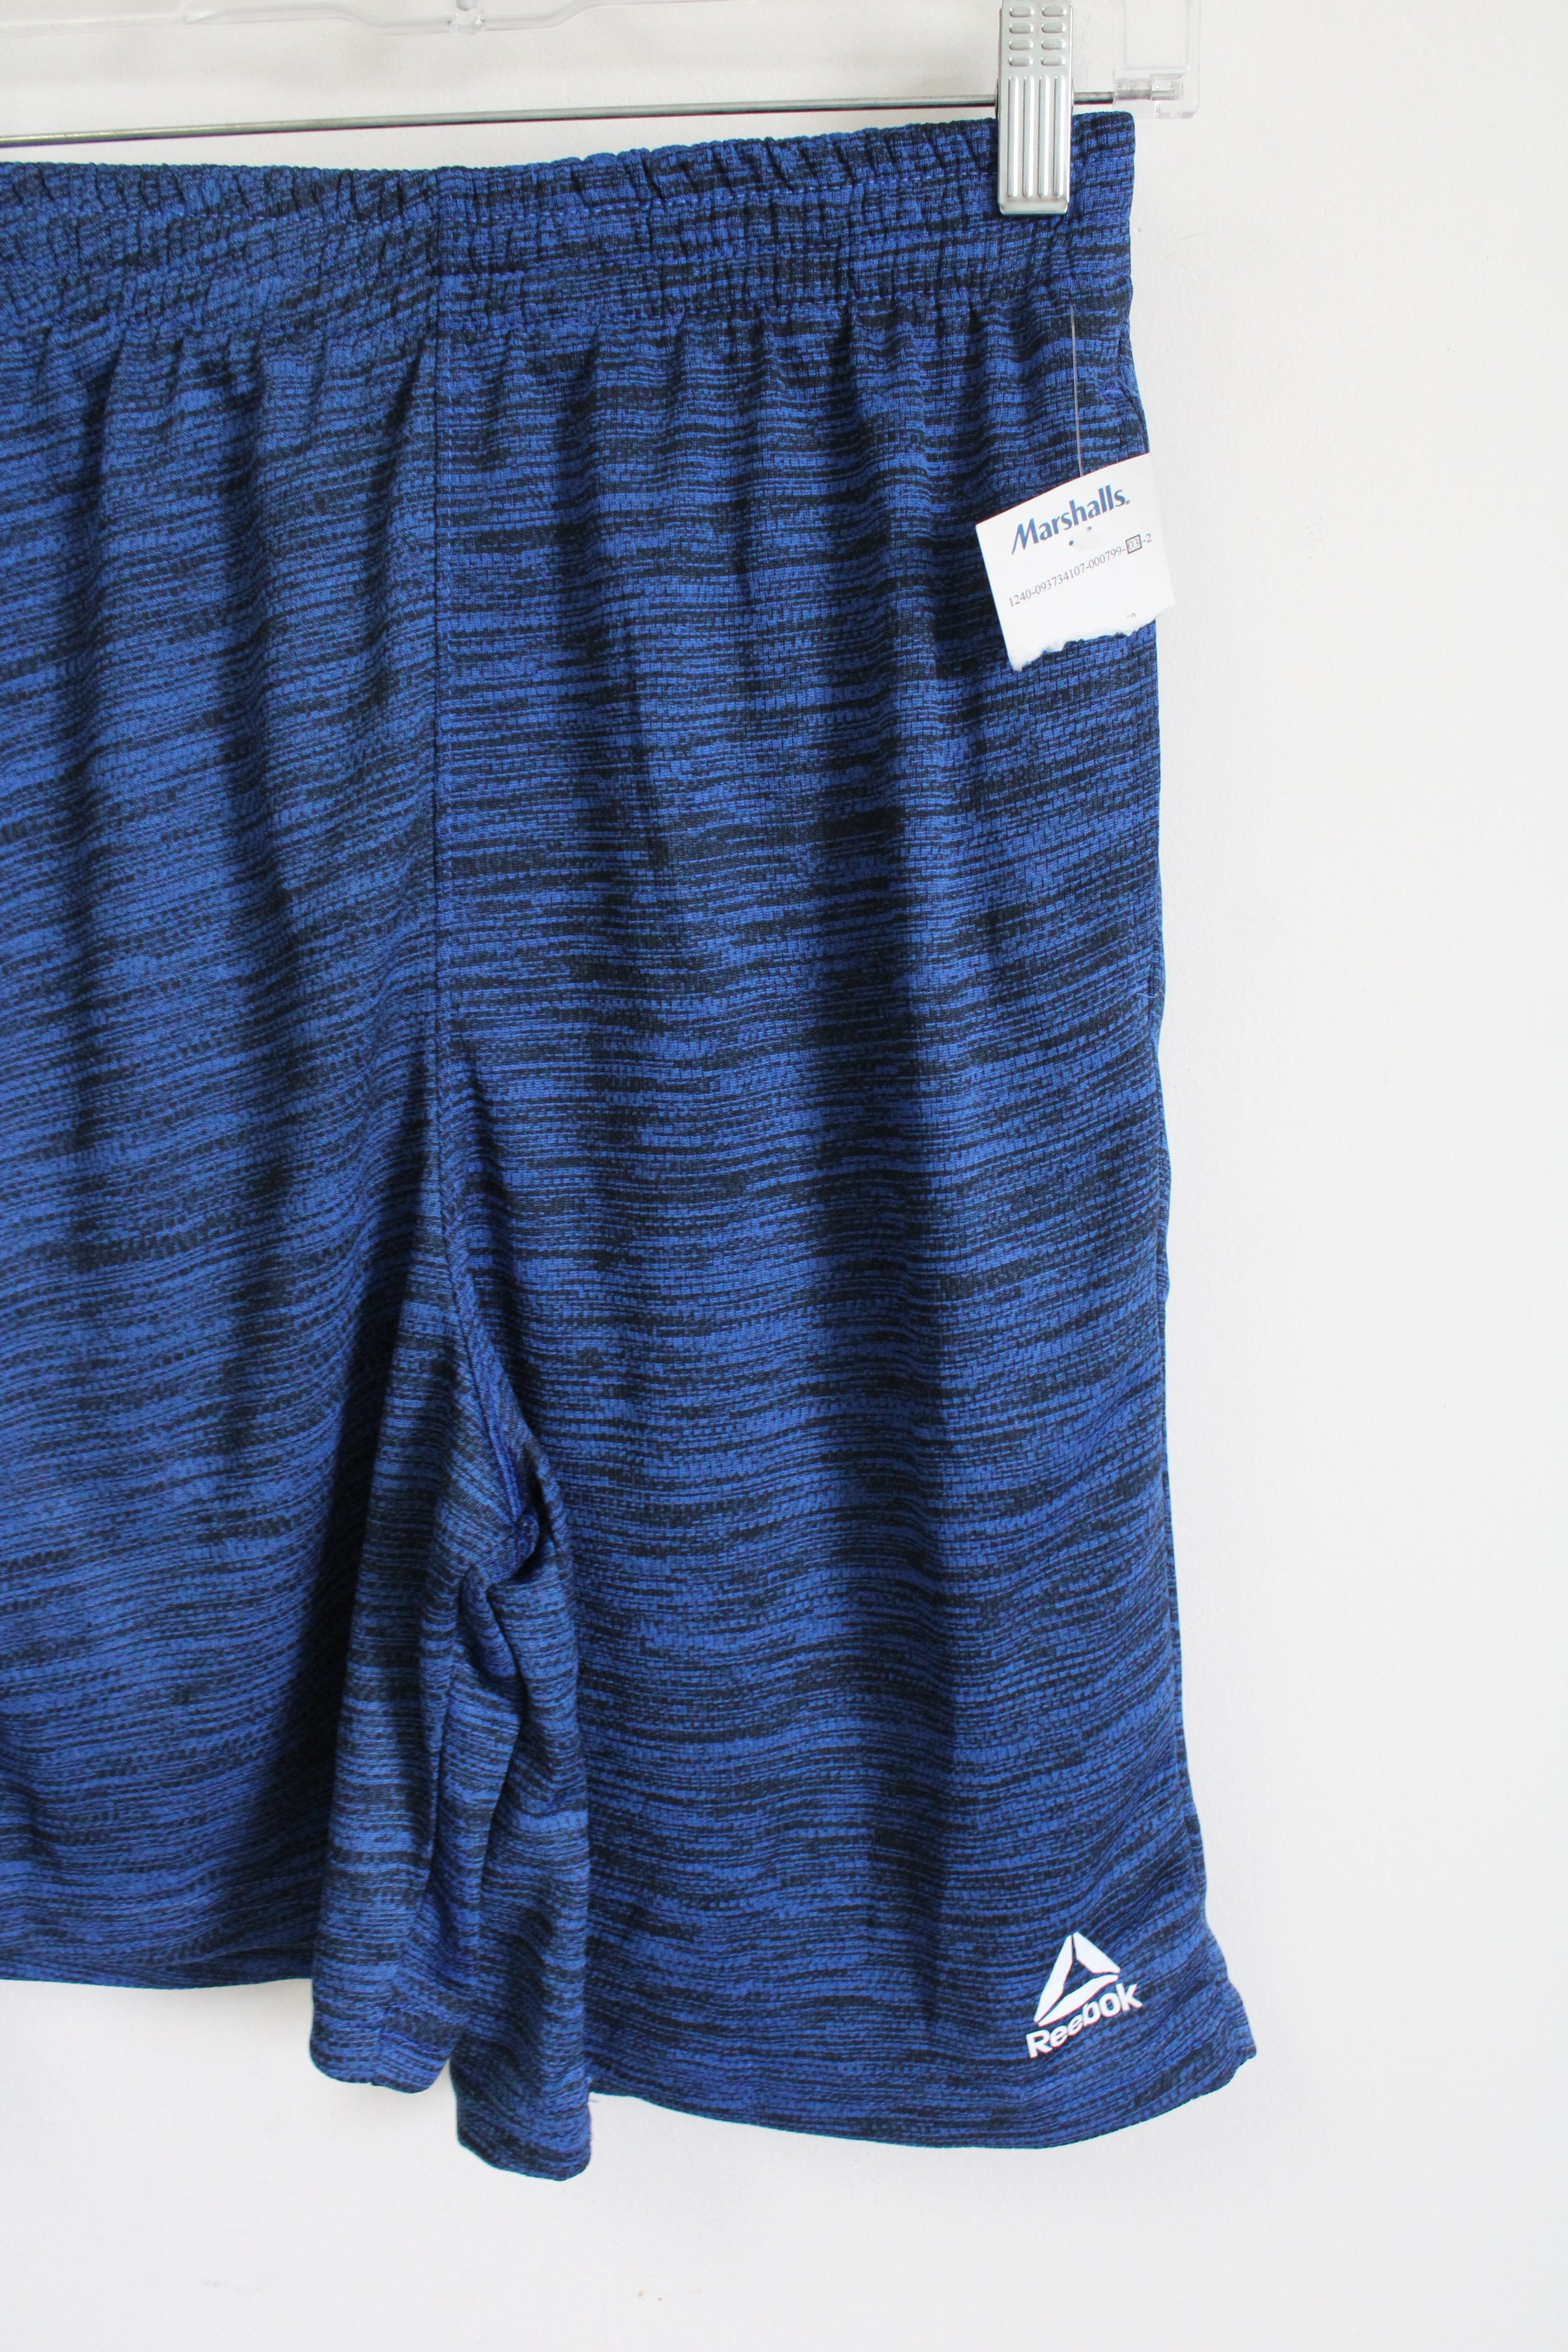 NEW Reebok Blue Shorts | Youth XL (18/20)